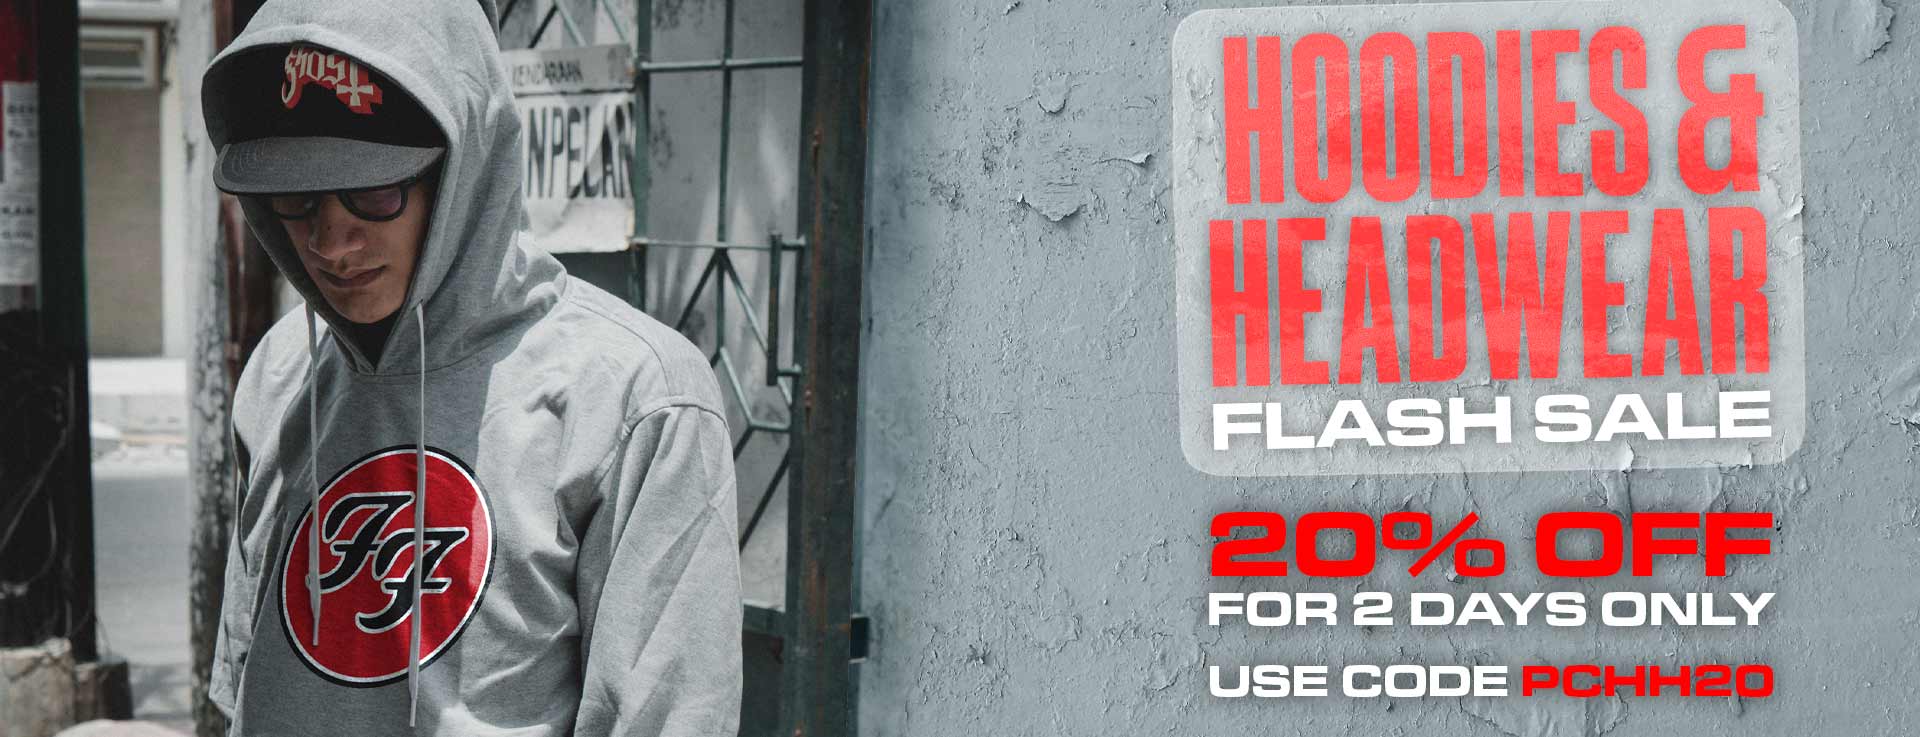 Hoodies & Headwear Flash Sale